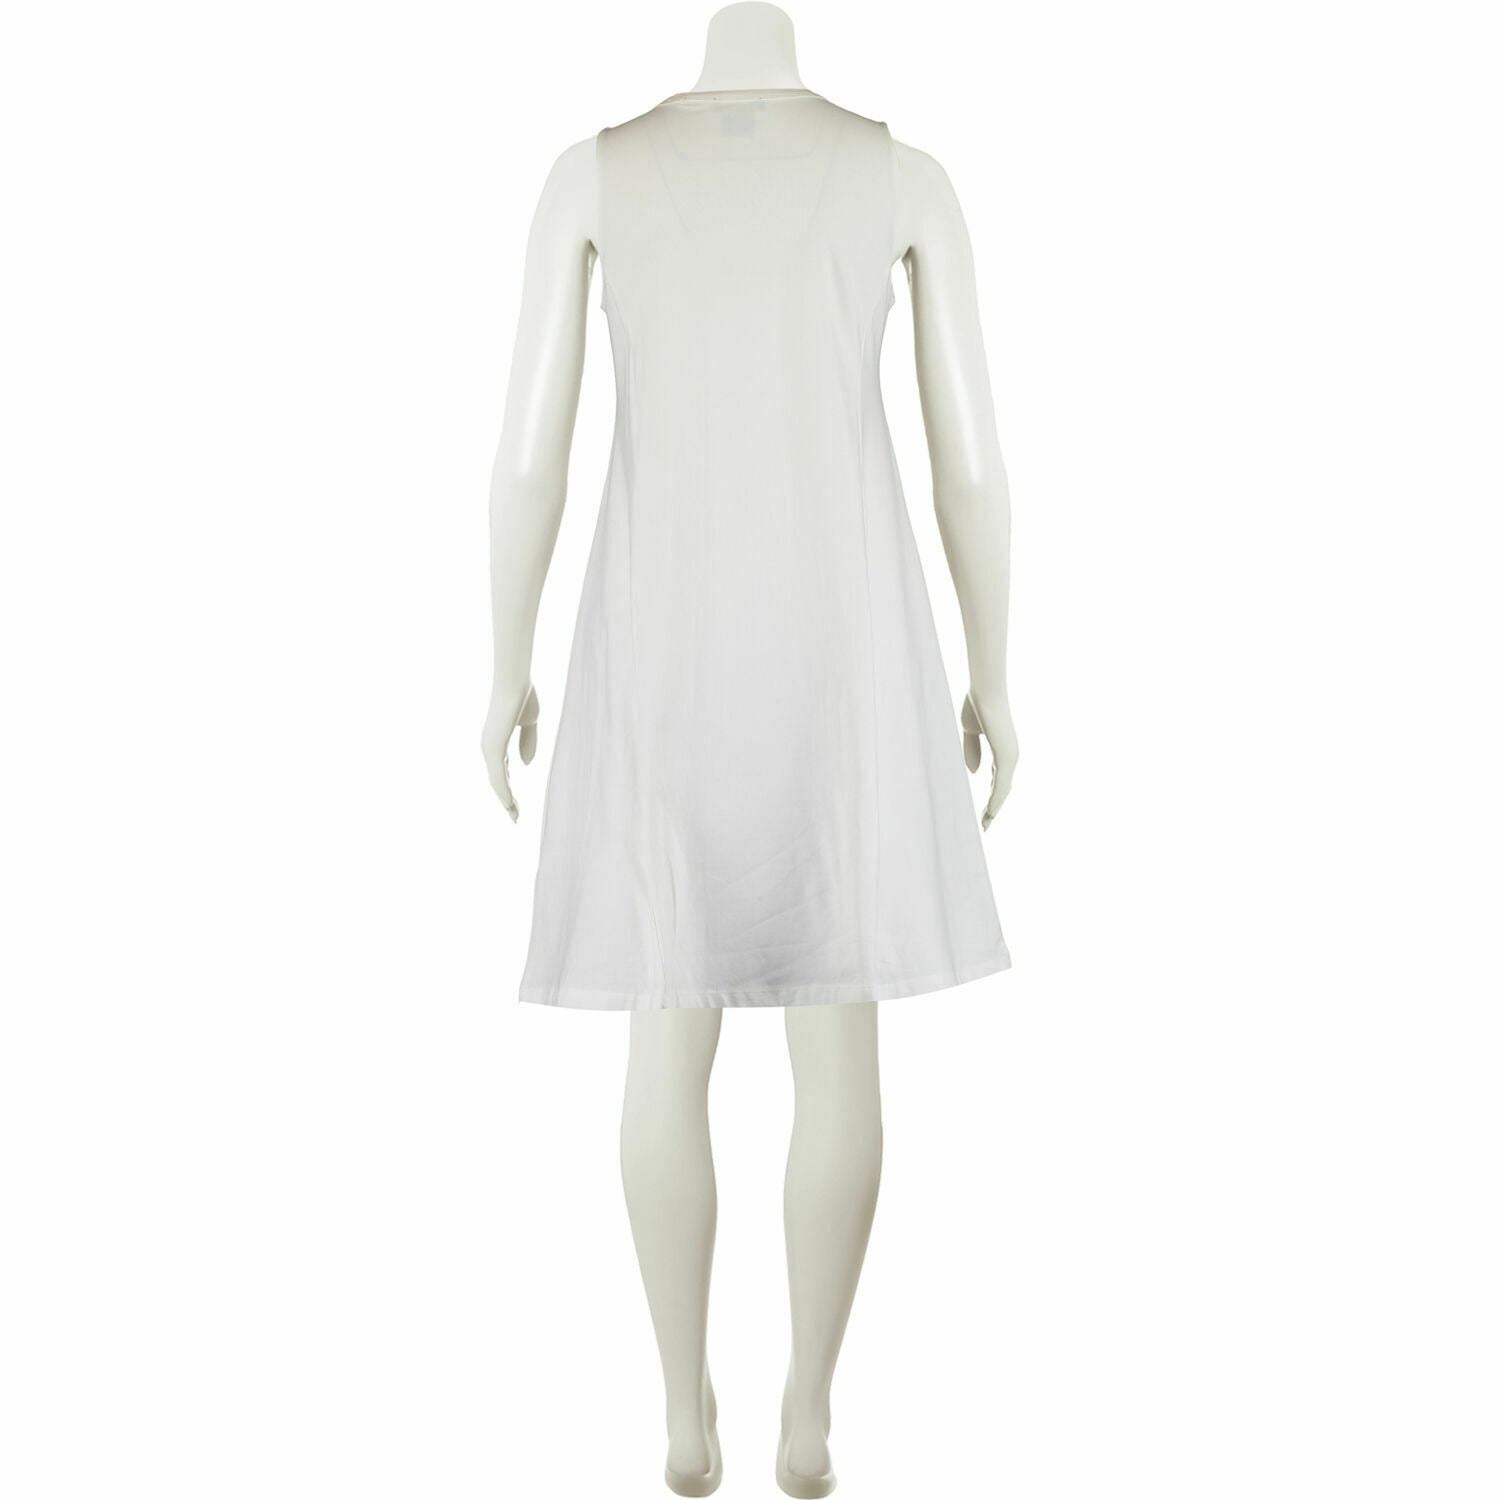 DKNY Women's Cream Sleeveless Jersey Dress, Logo Print, size UK 10